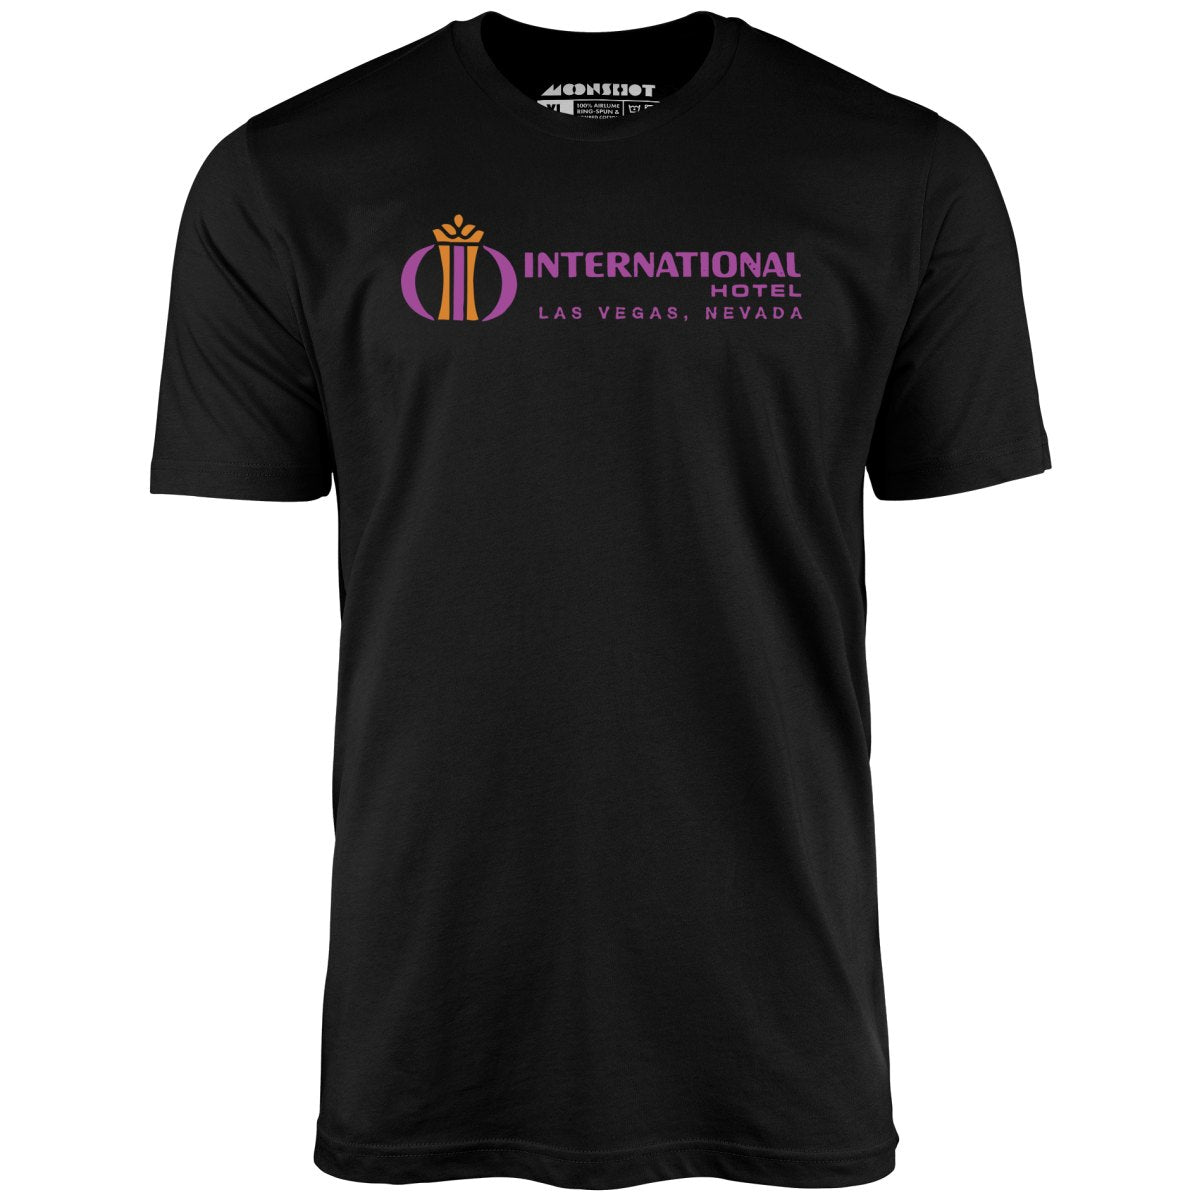 International Hotel - Vintage Las Vegas - Unisex T-Shirt